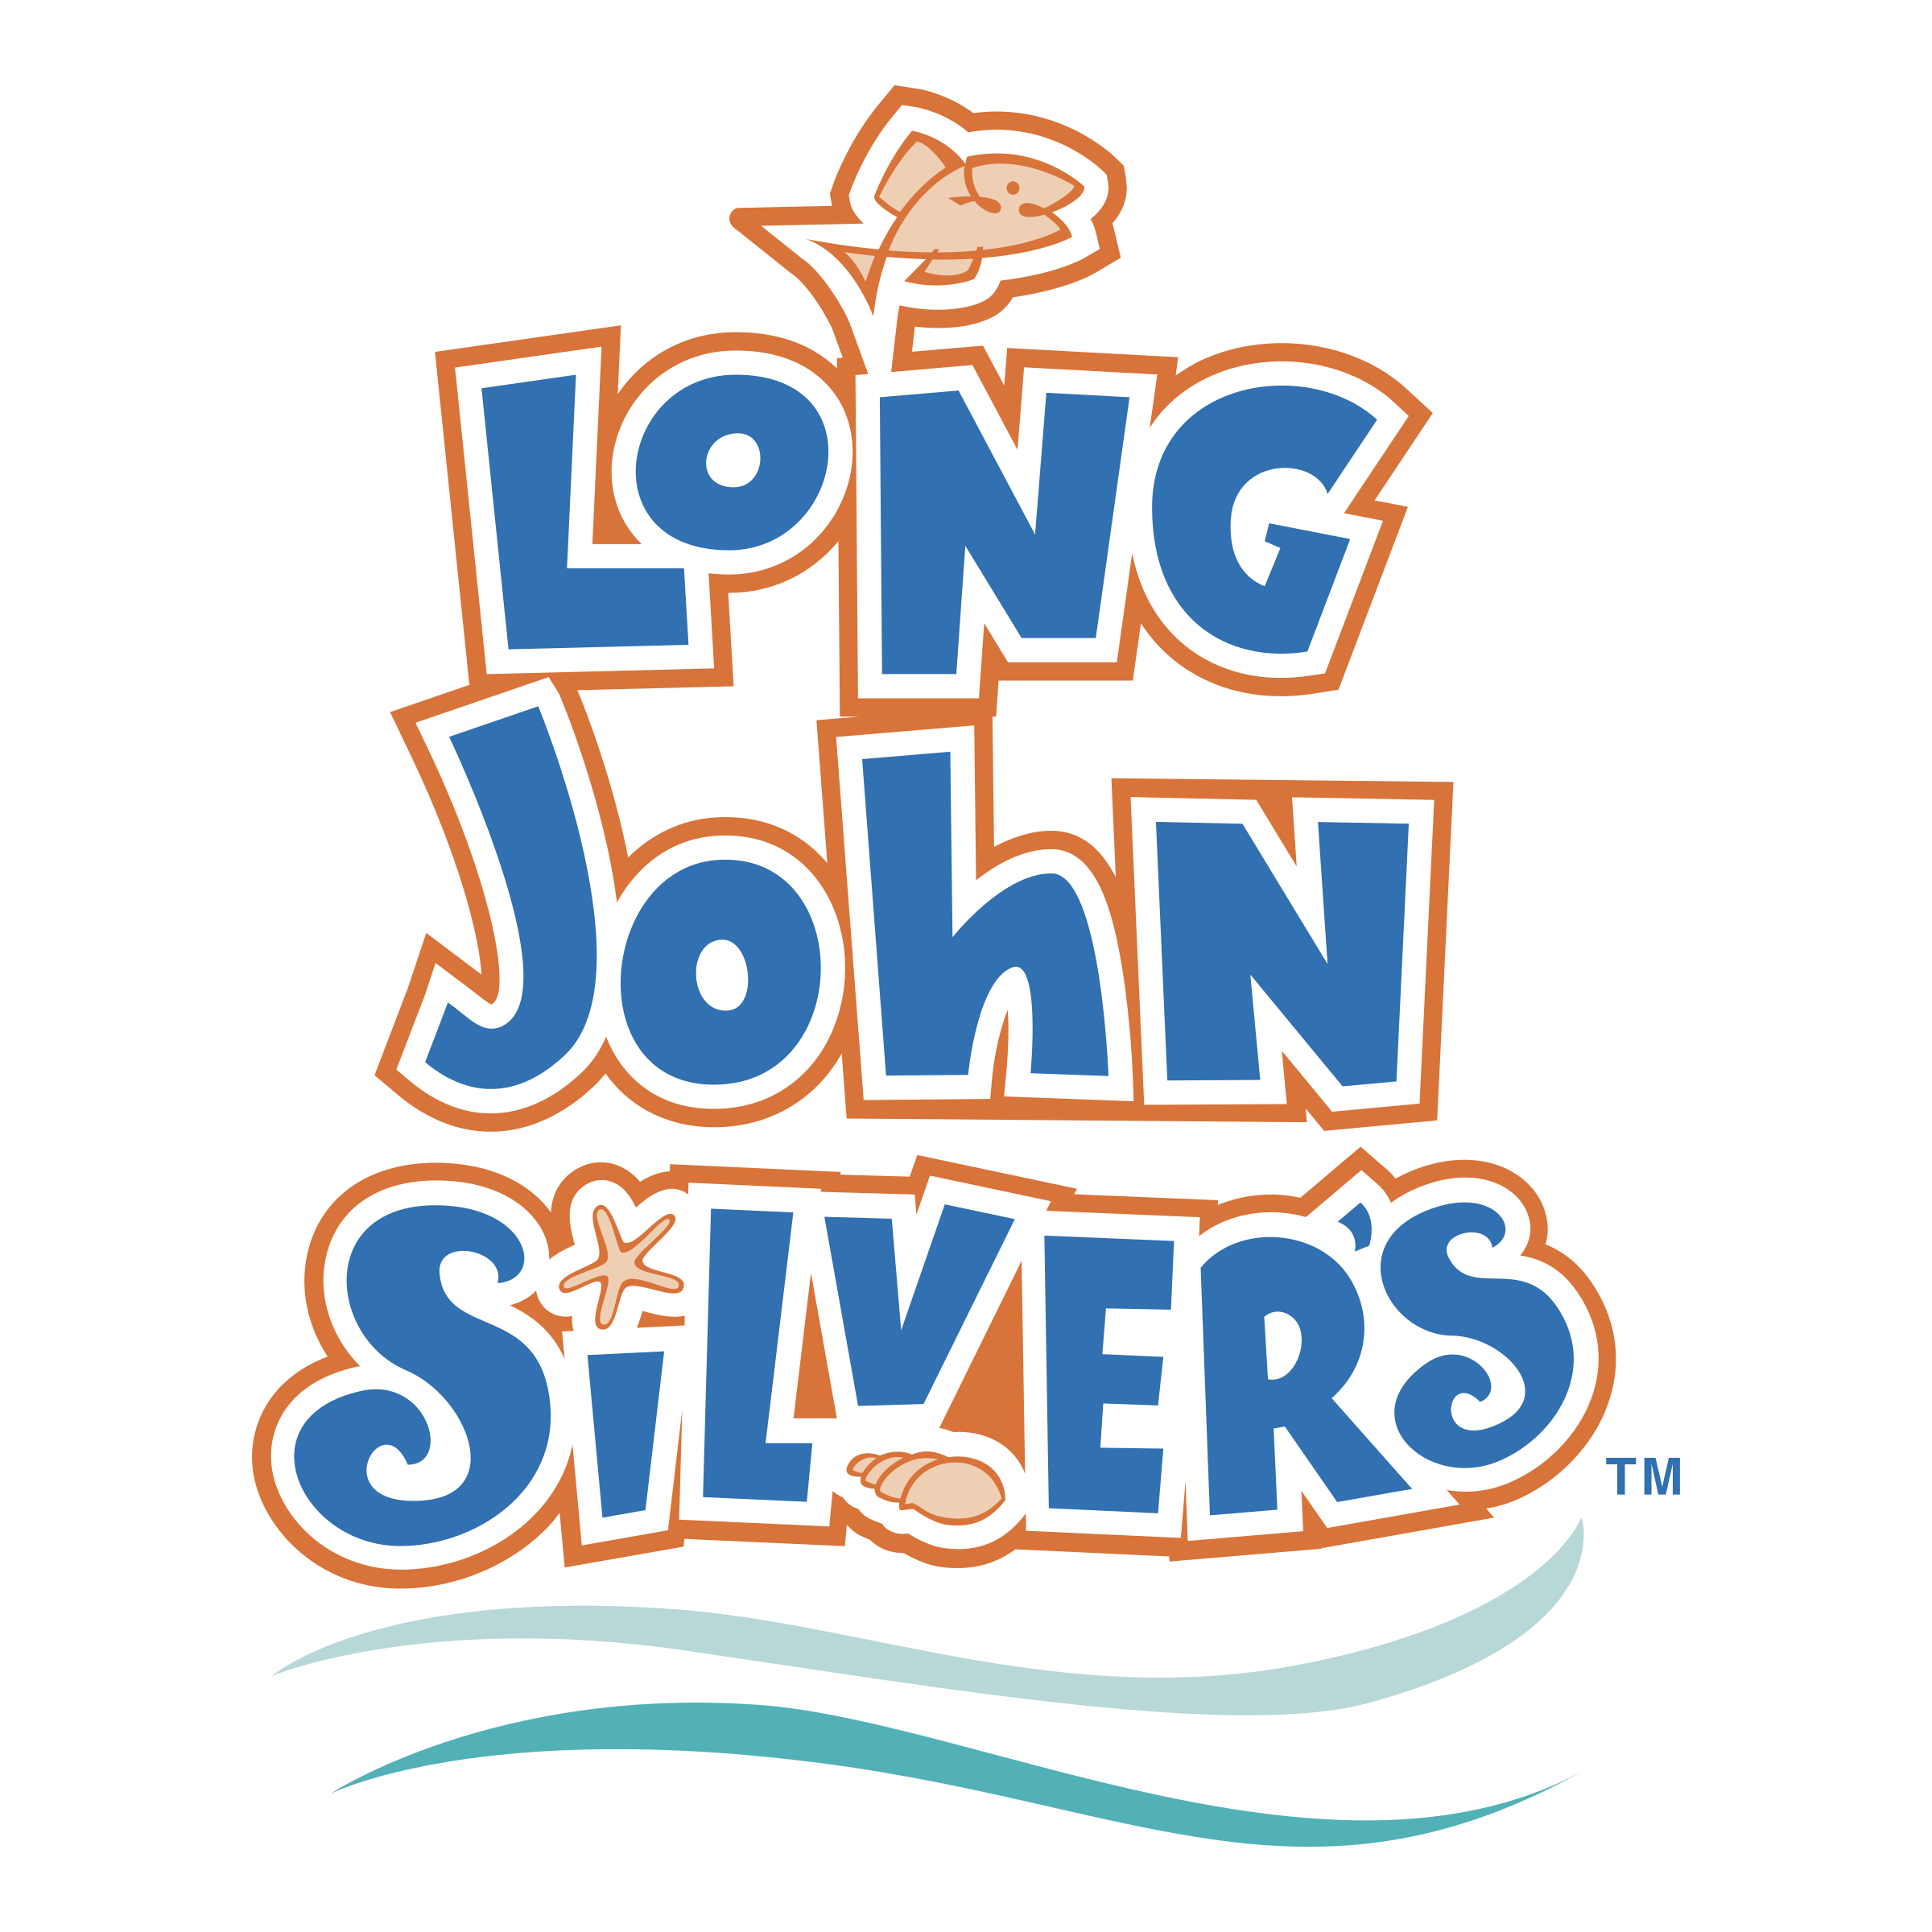 Silver's Logo - Long John Silver's Logo PNG Transparent & SVG Vector - Freebie Supply